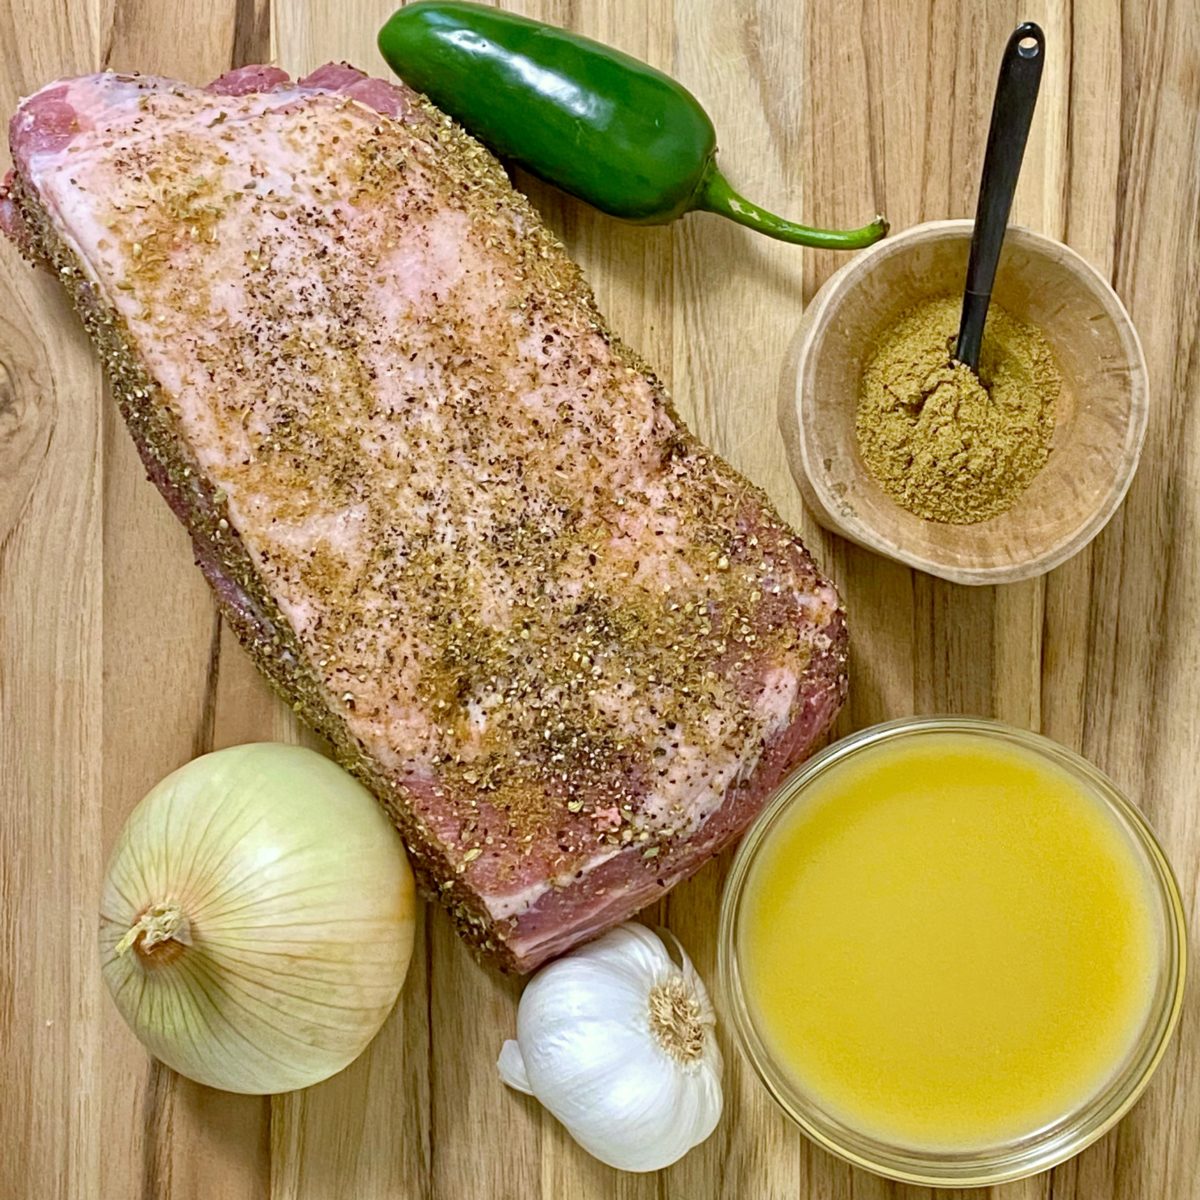 Ingredients to make carnitas o a wood board including pork butt roast, chicken broth, onion, garlic, jalapeño, and cumin.